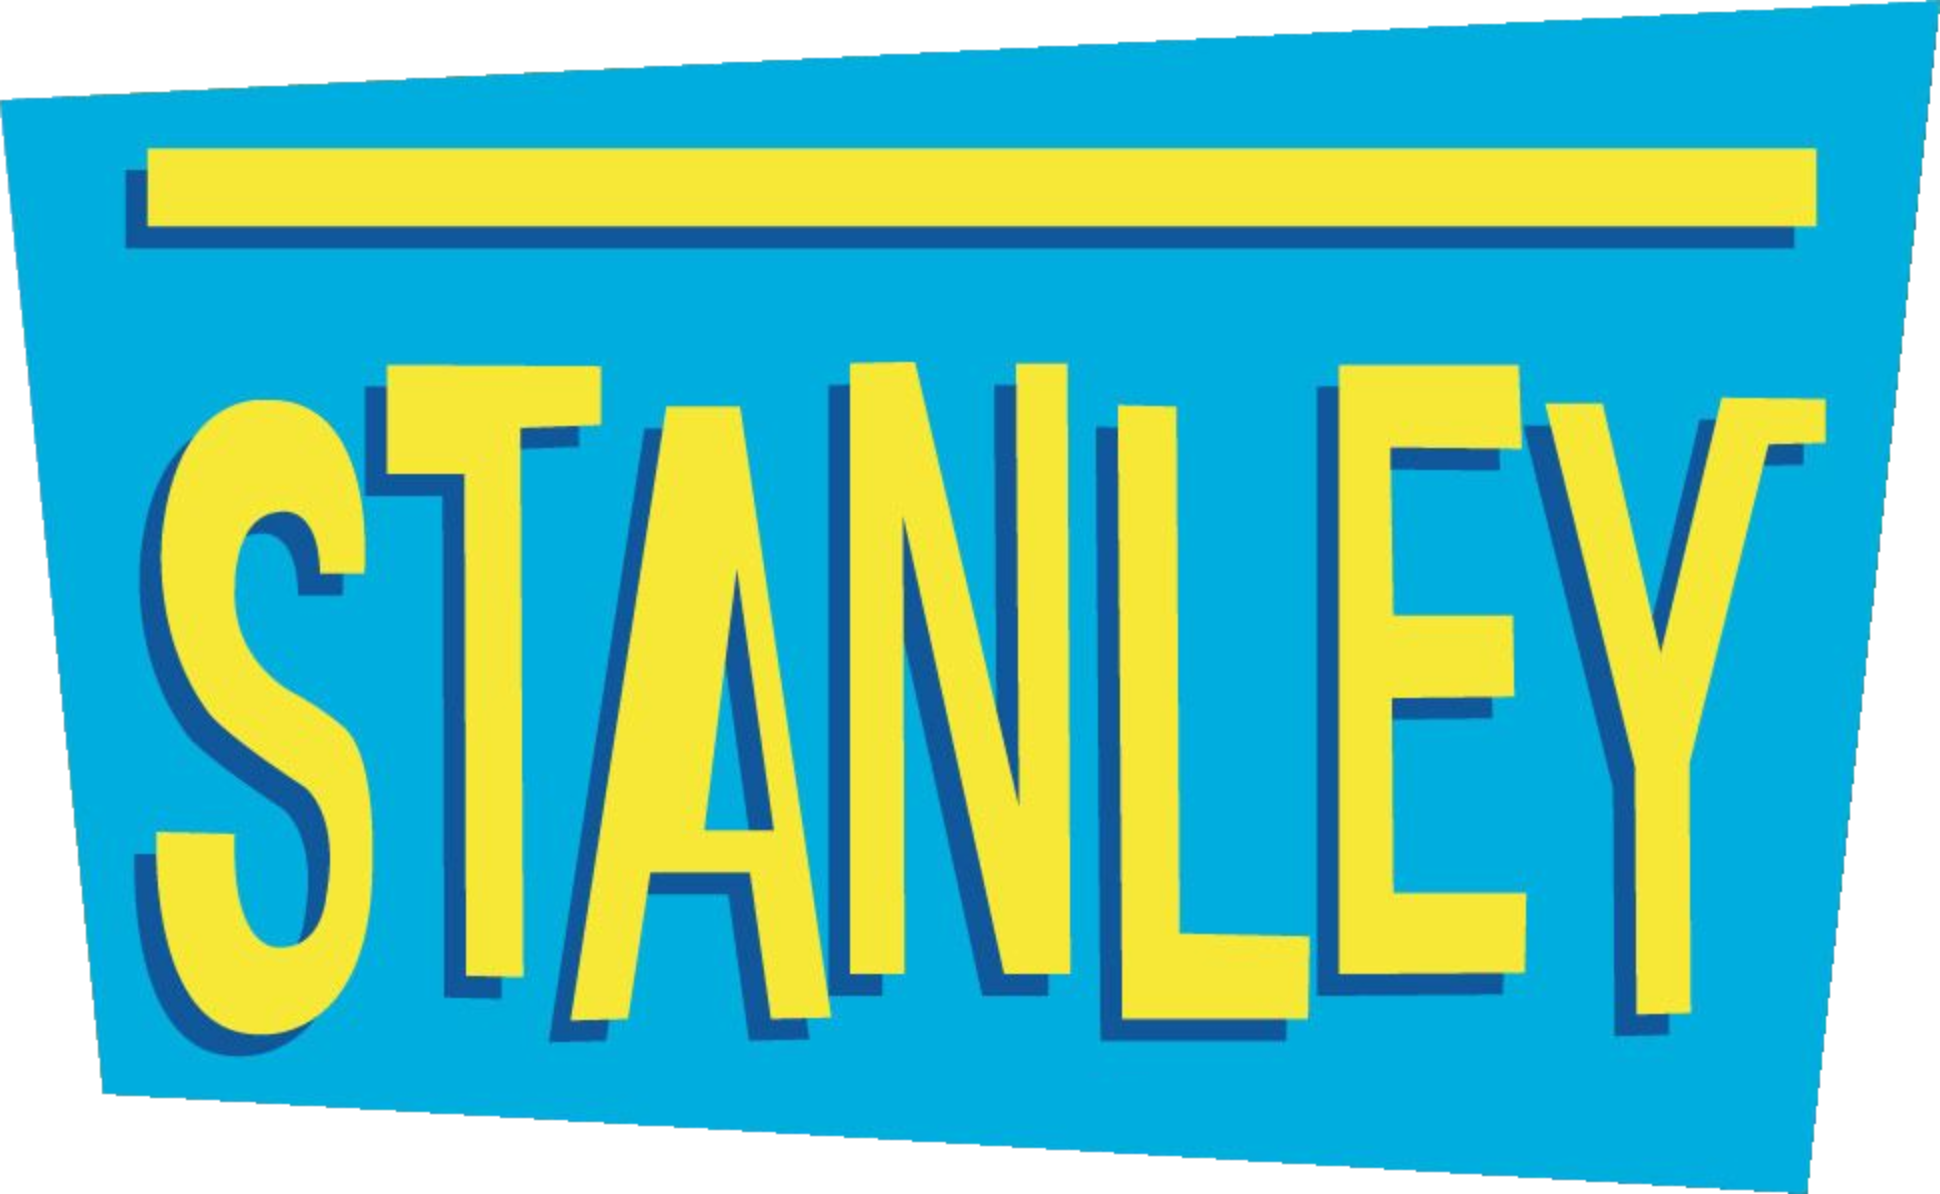 Stanley Complete (1 DVD Box Set)